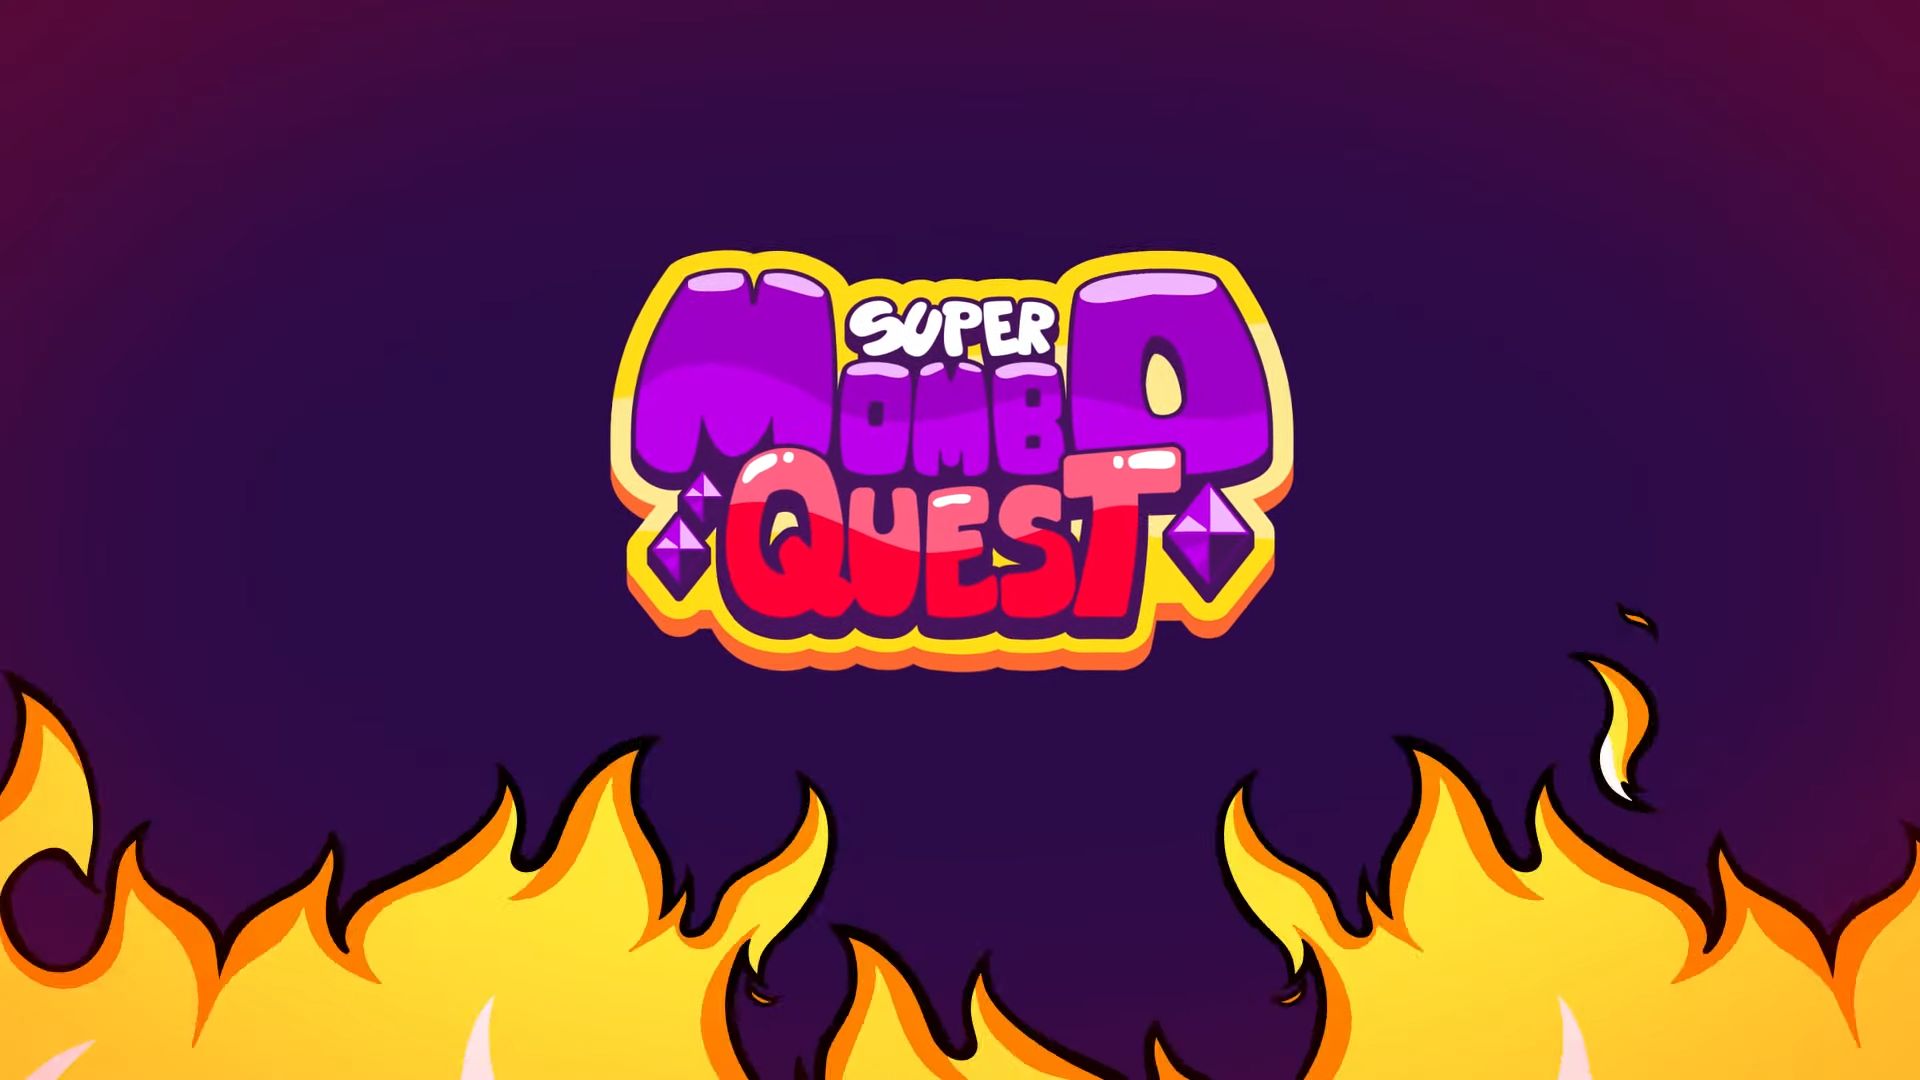 Download Super Mombo Quest für Android kostenlos.